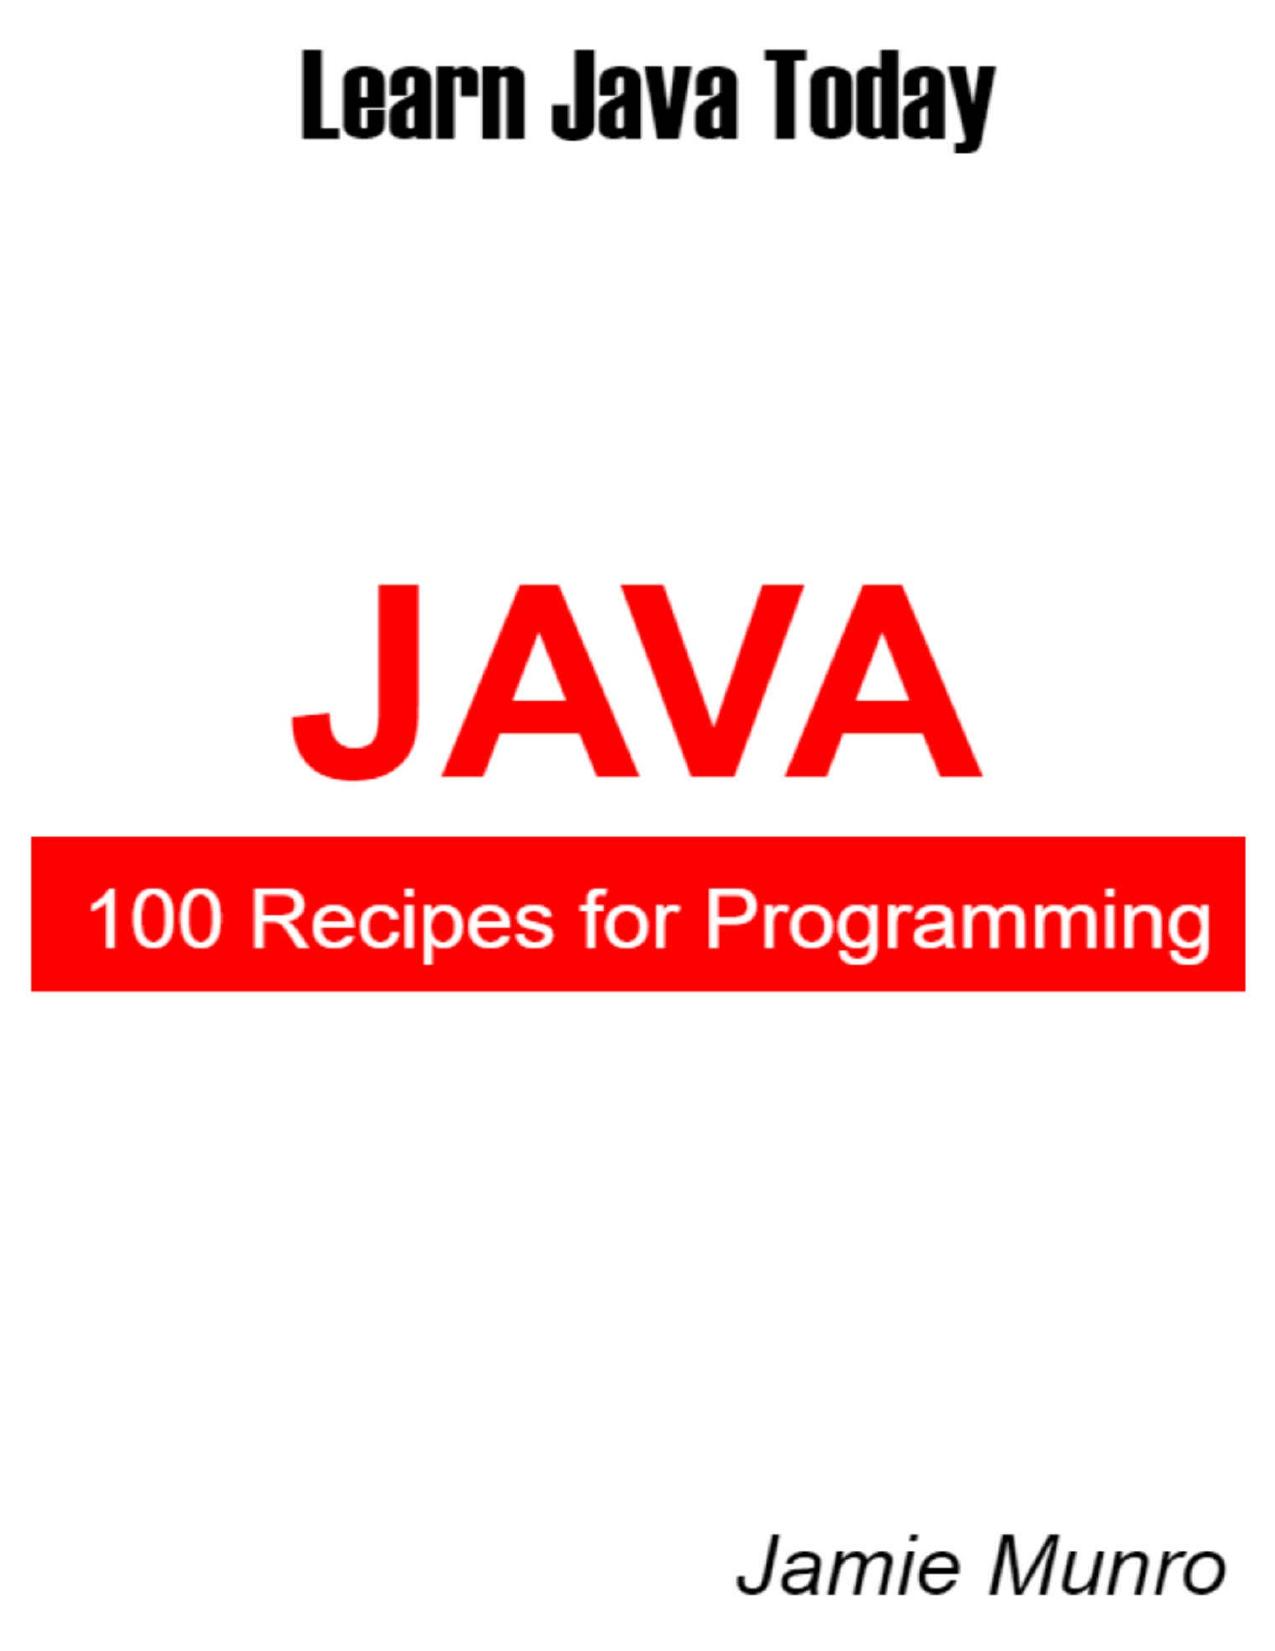 100 Recipes for Programming Jav - Jamie Munro - Jamie Munro.jpg